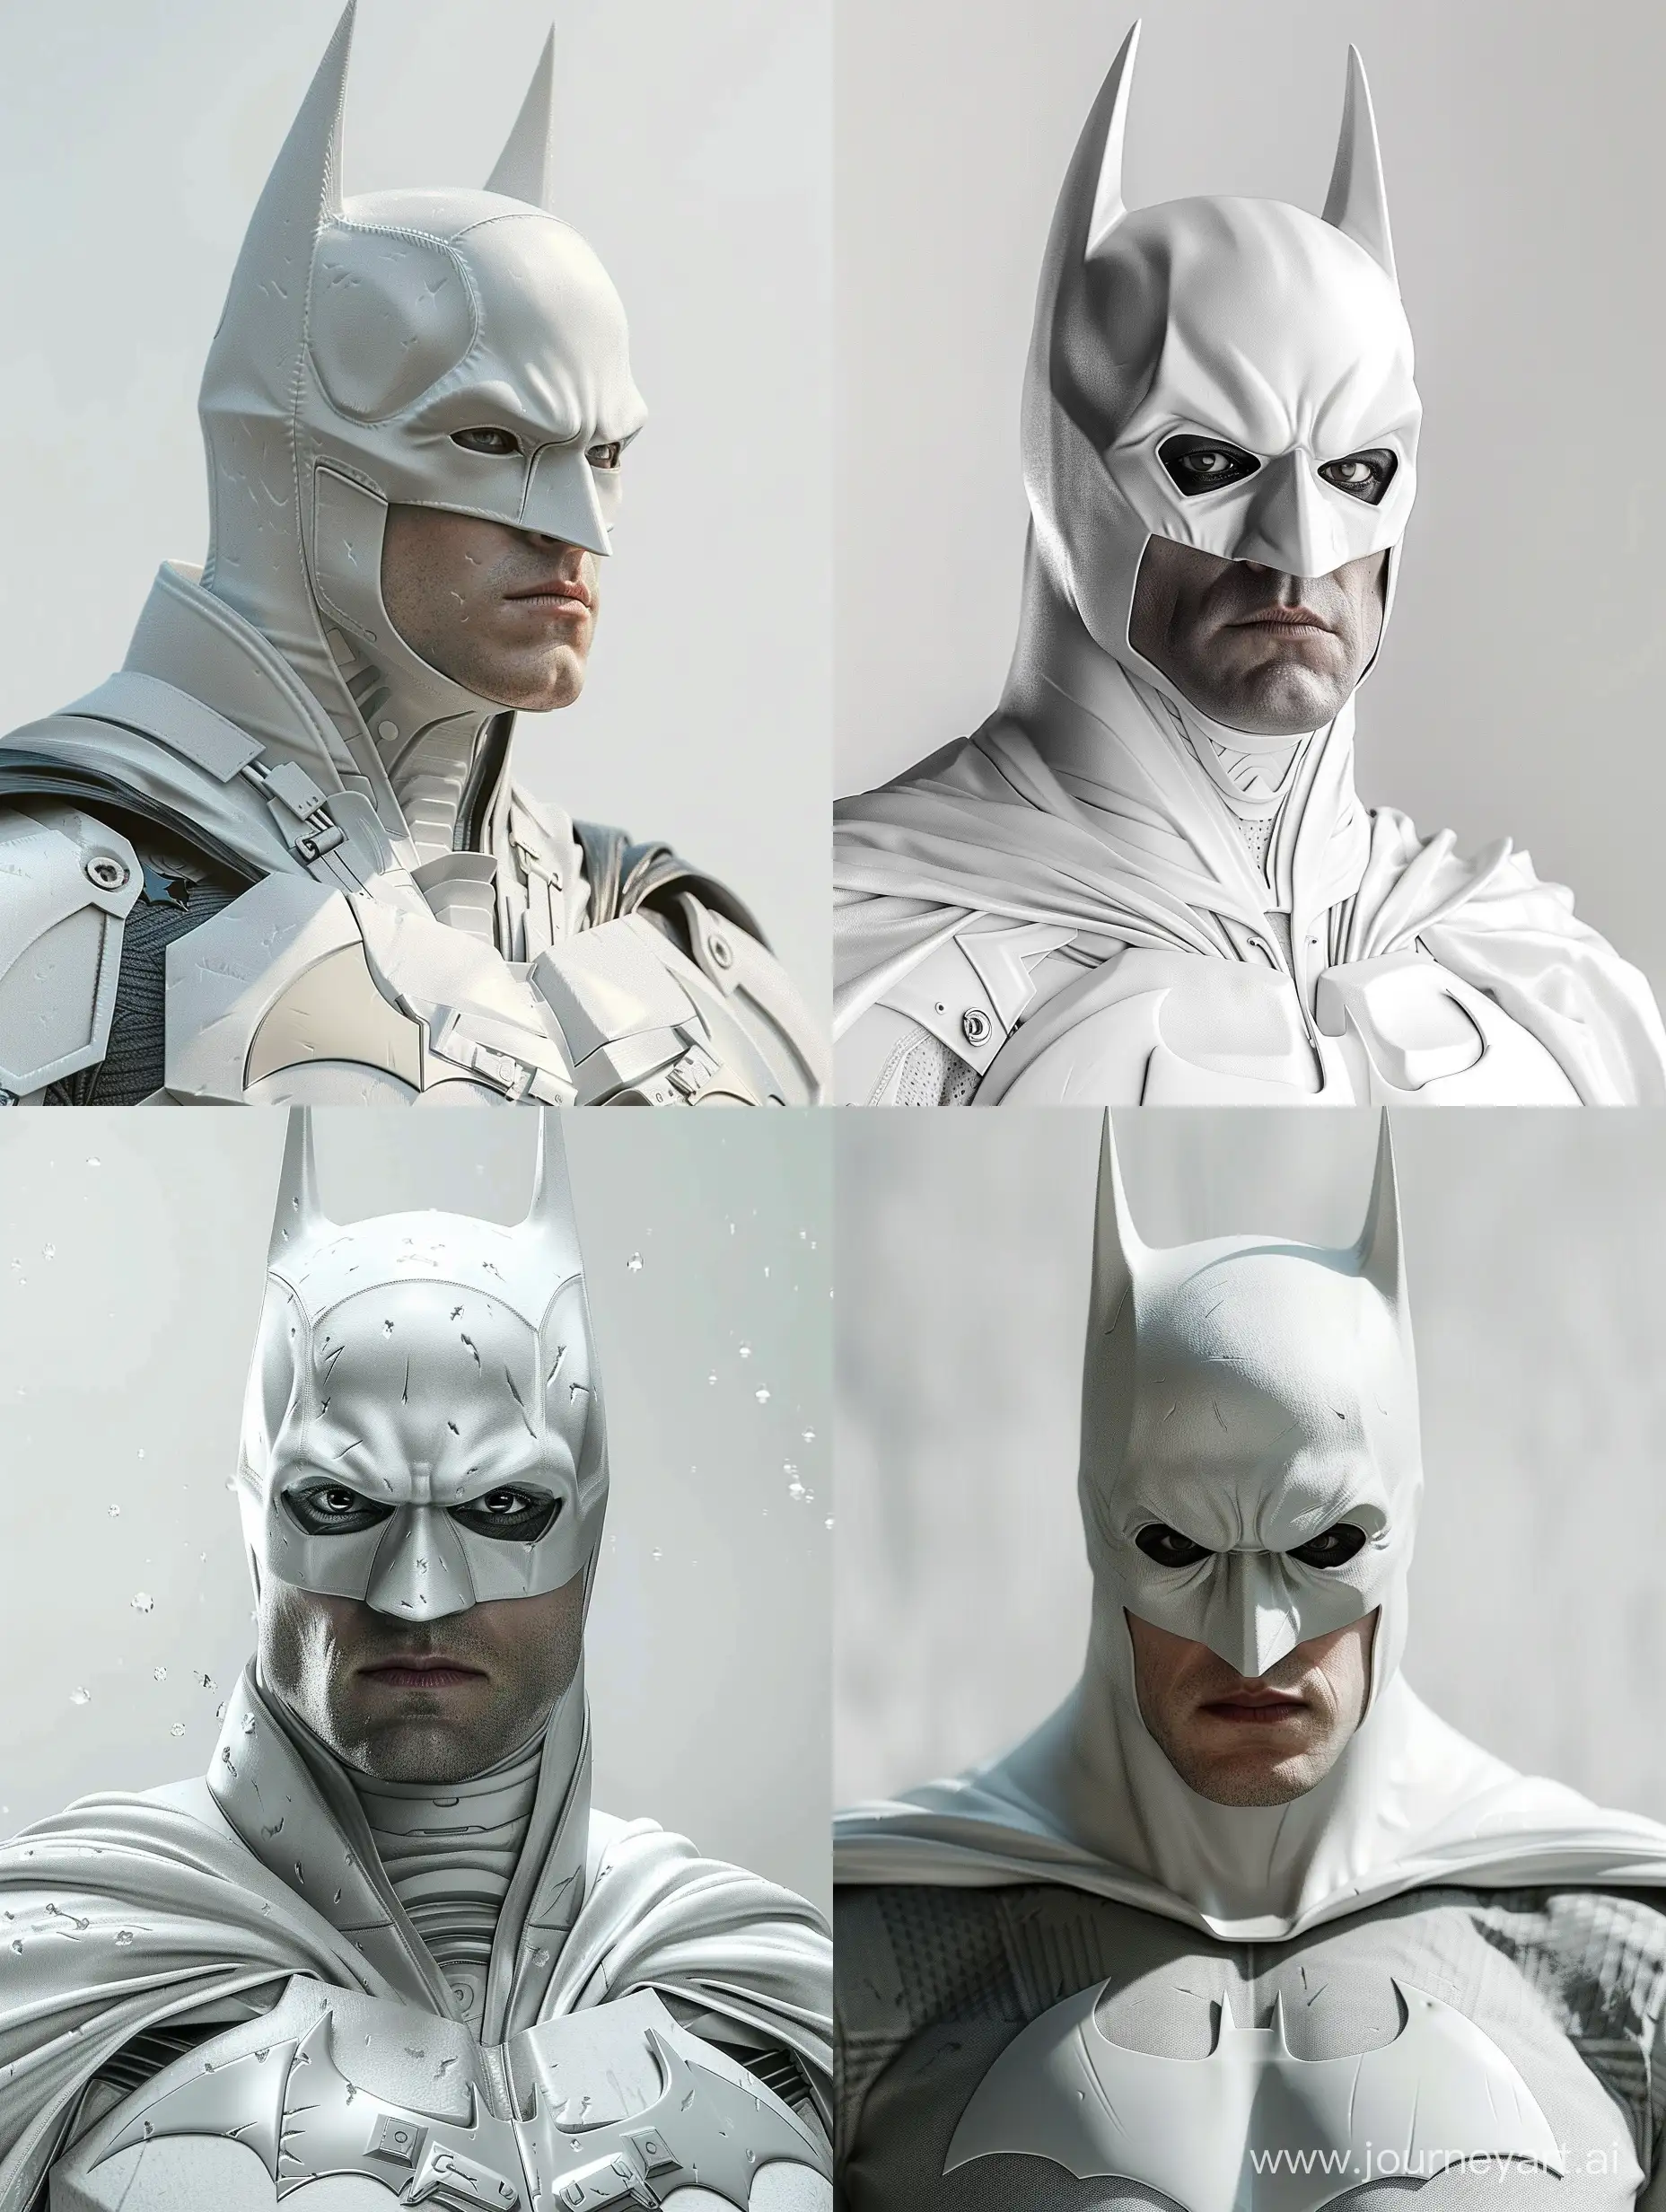 Christian-Bale-as-Batman-in-UltraRealistic-White-Costume